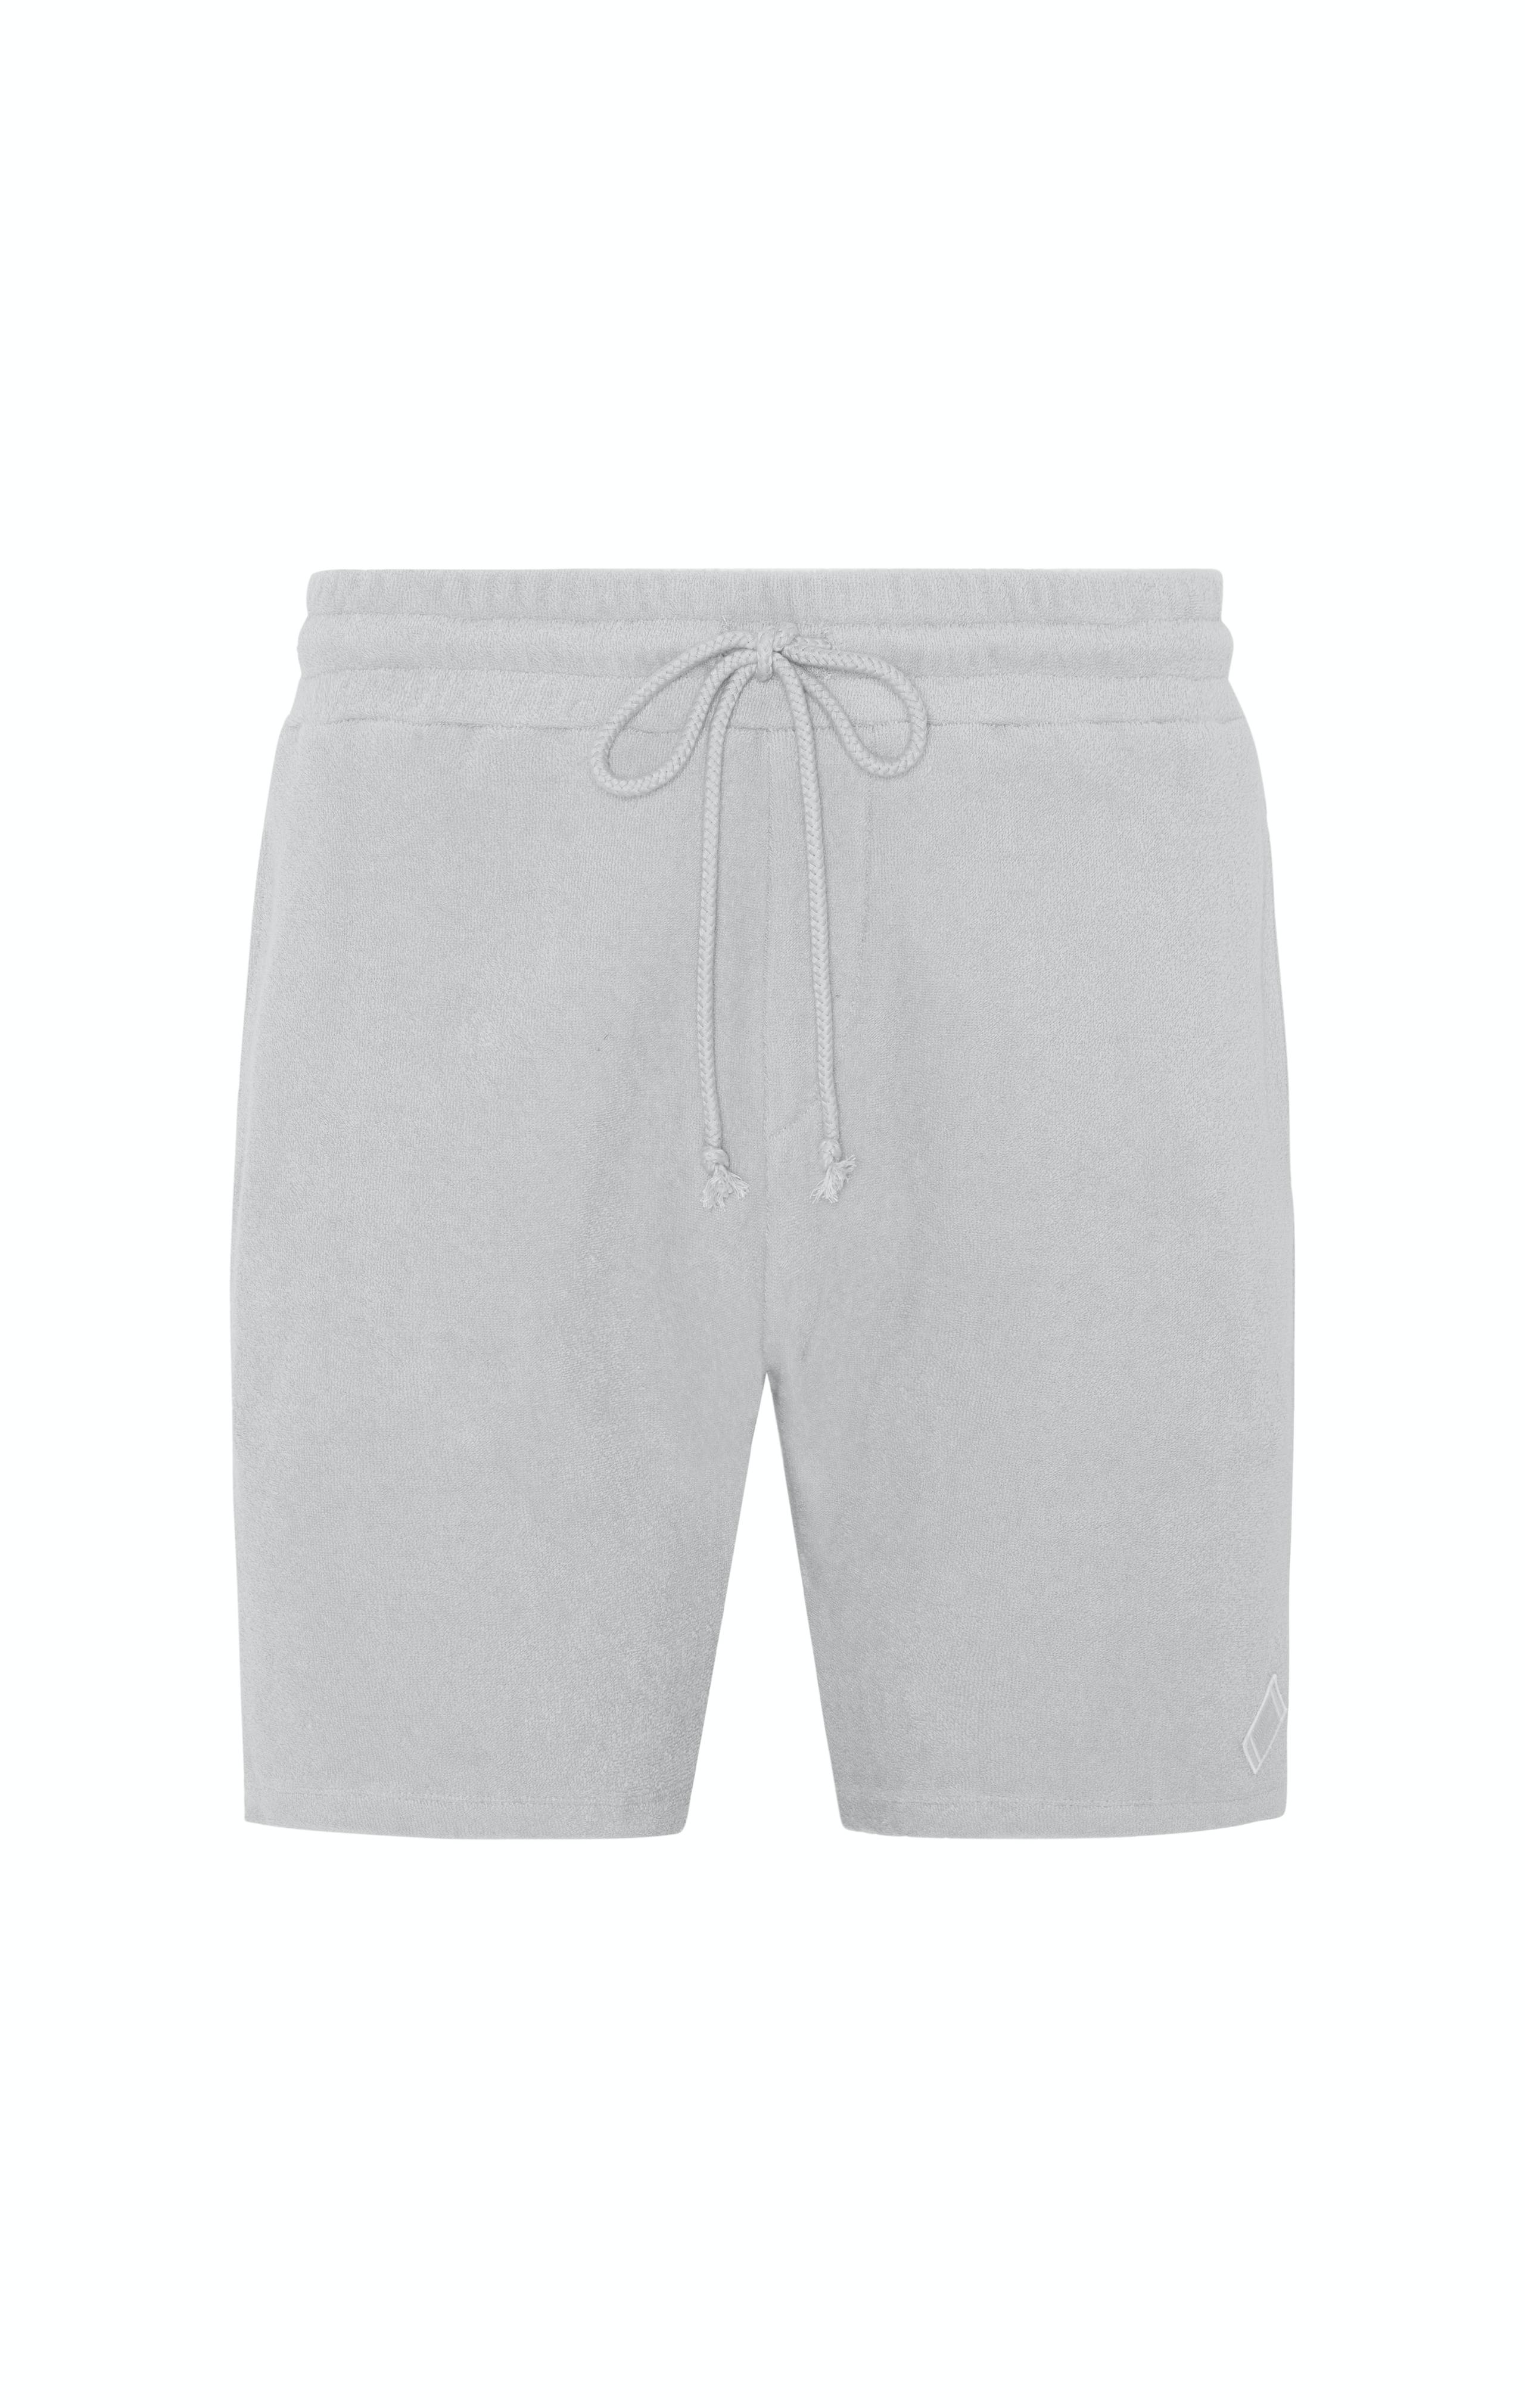 Onepiece Towel Club Shorts Light Grey - 1